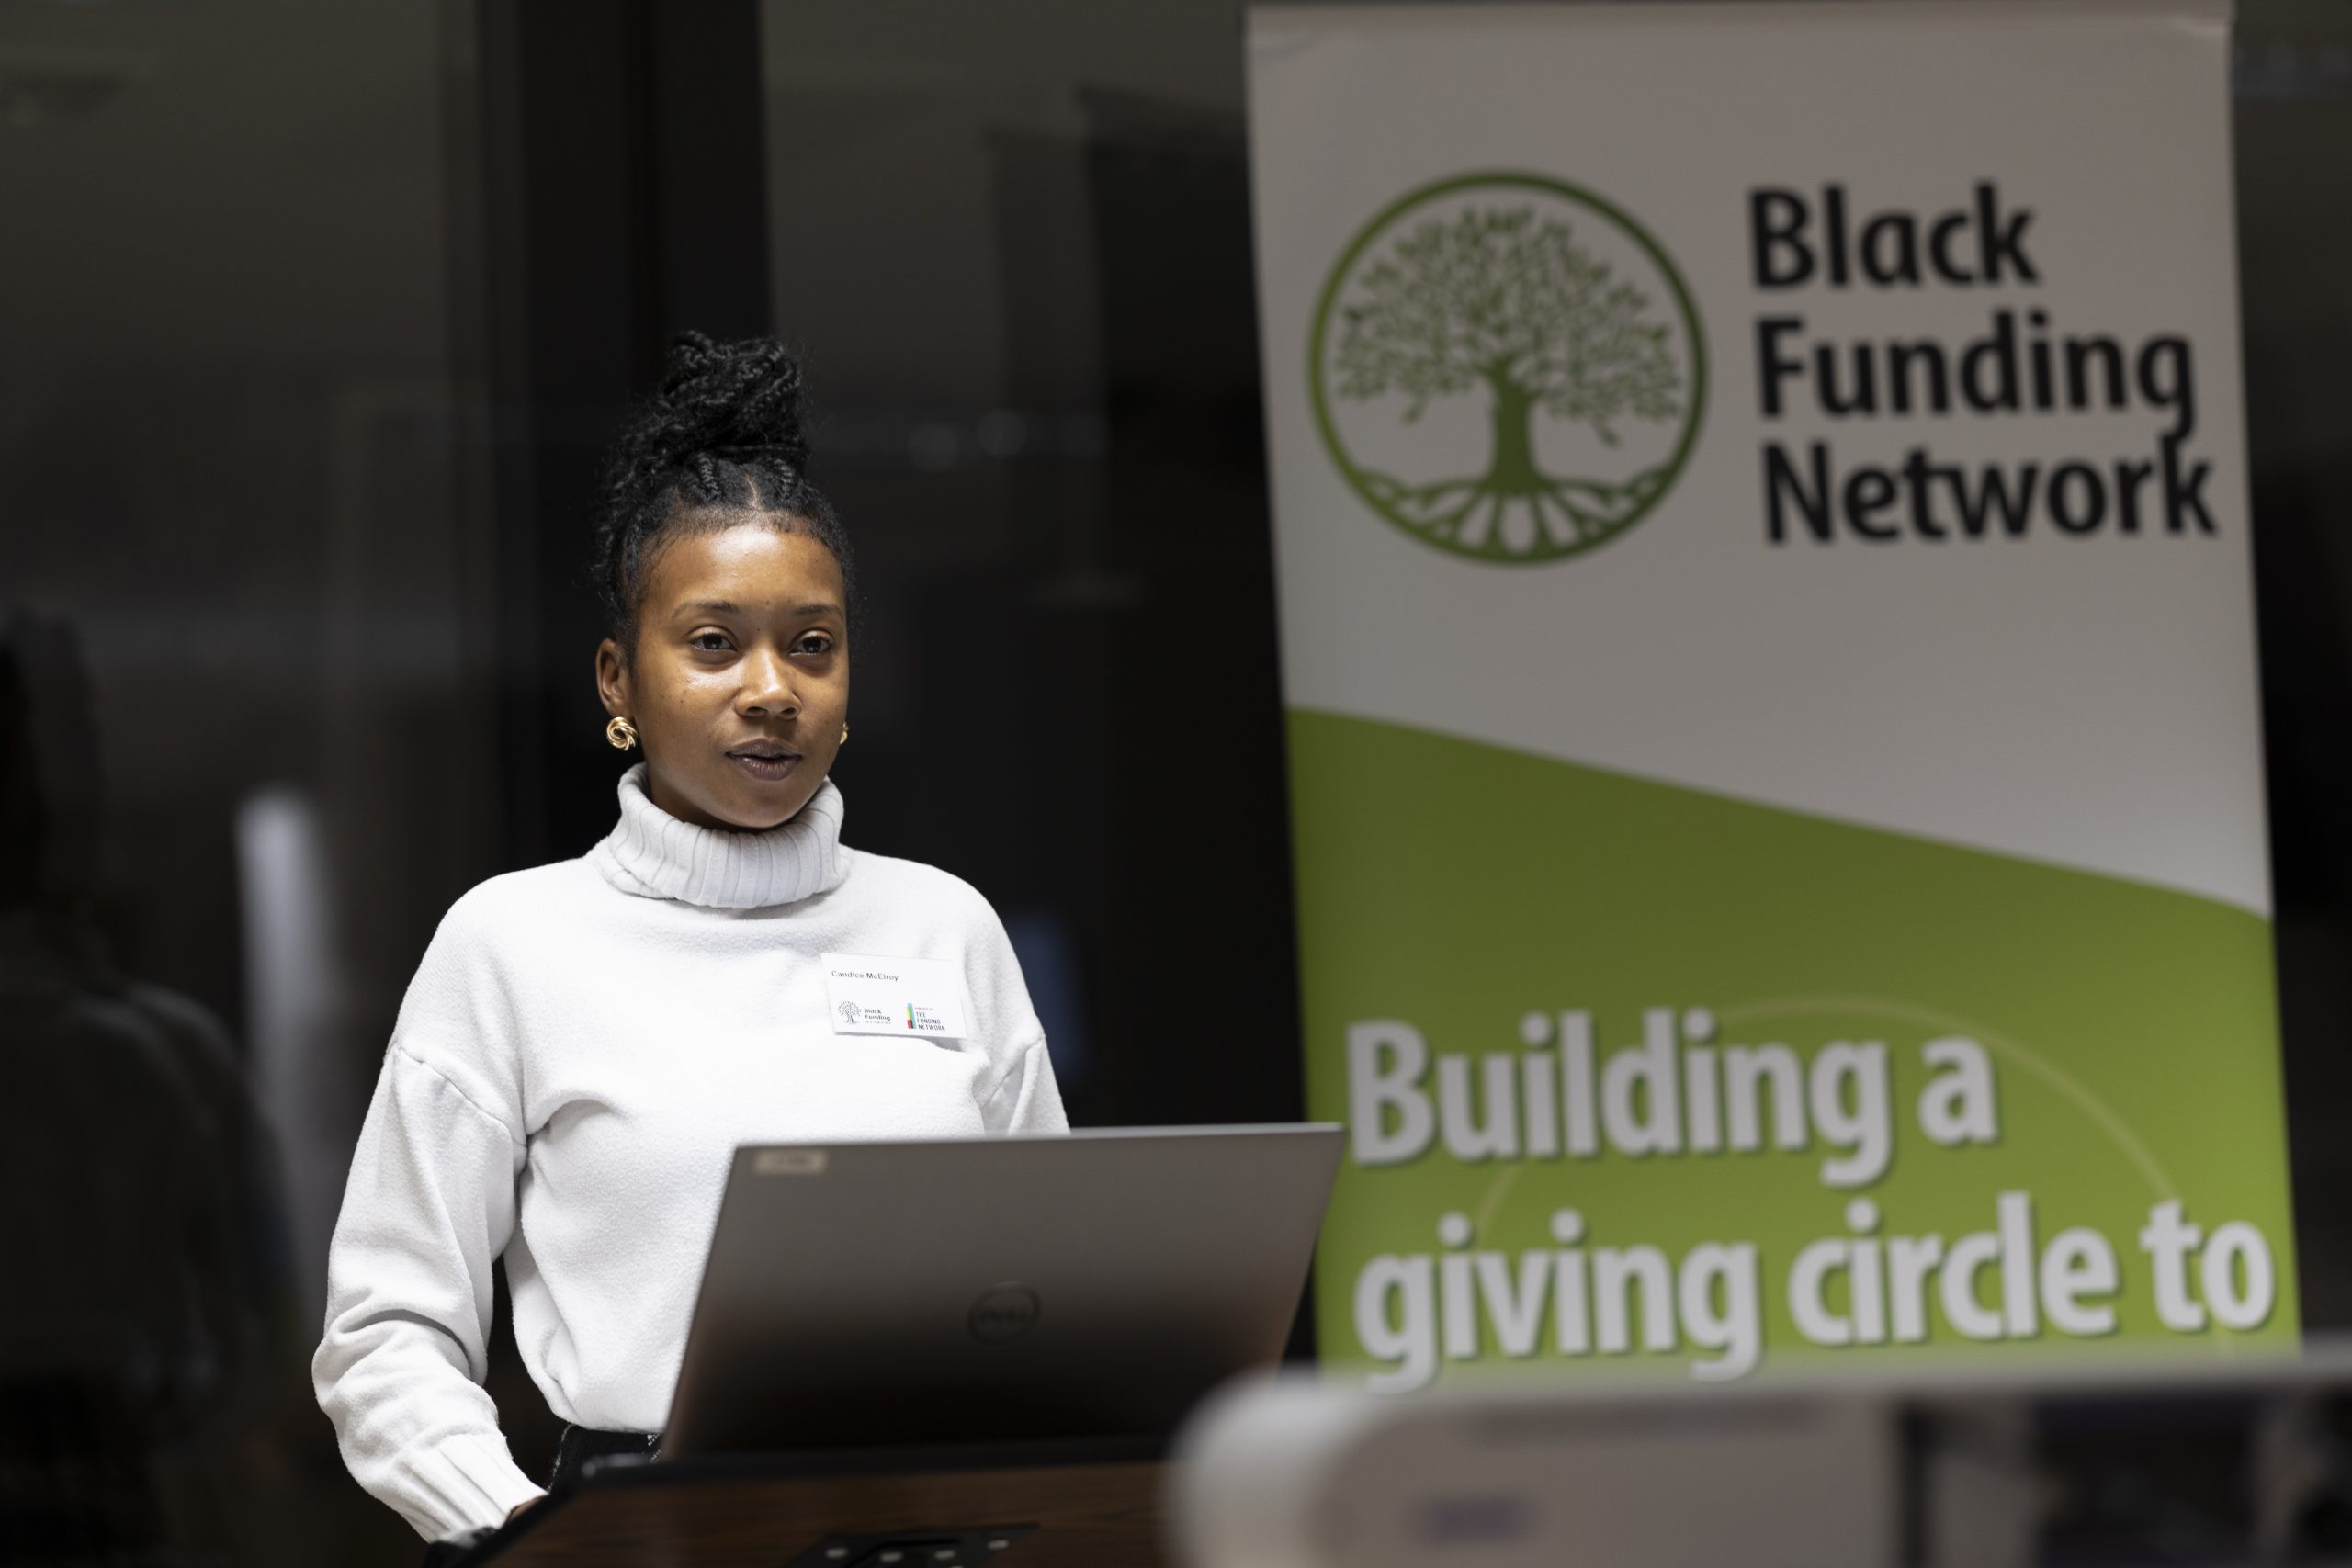 Funding for organisations in the UK - Black Funding Network